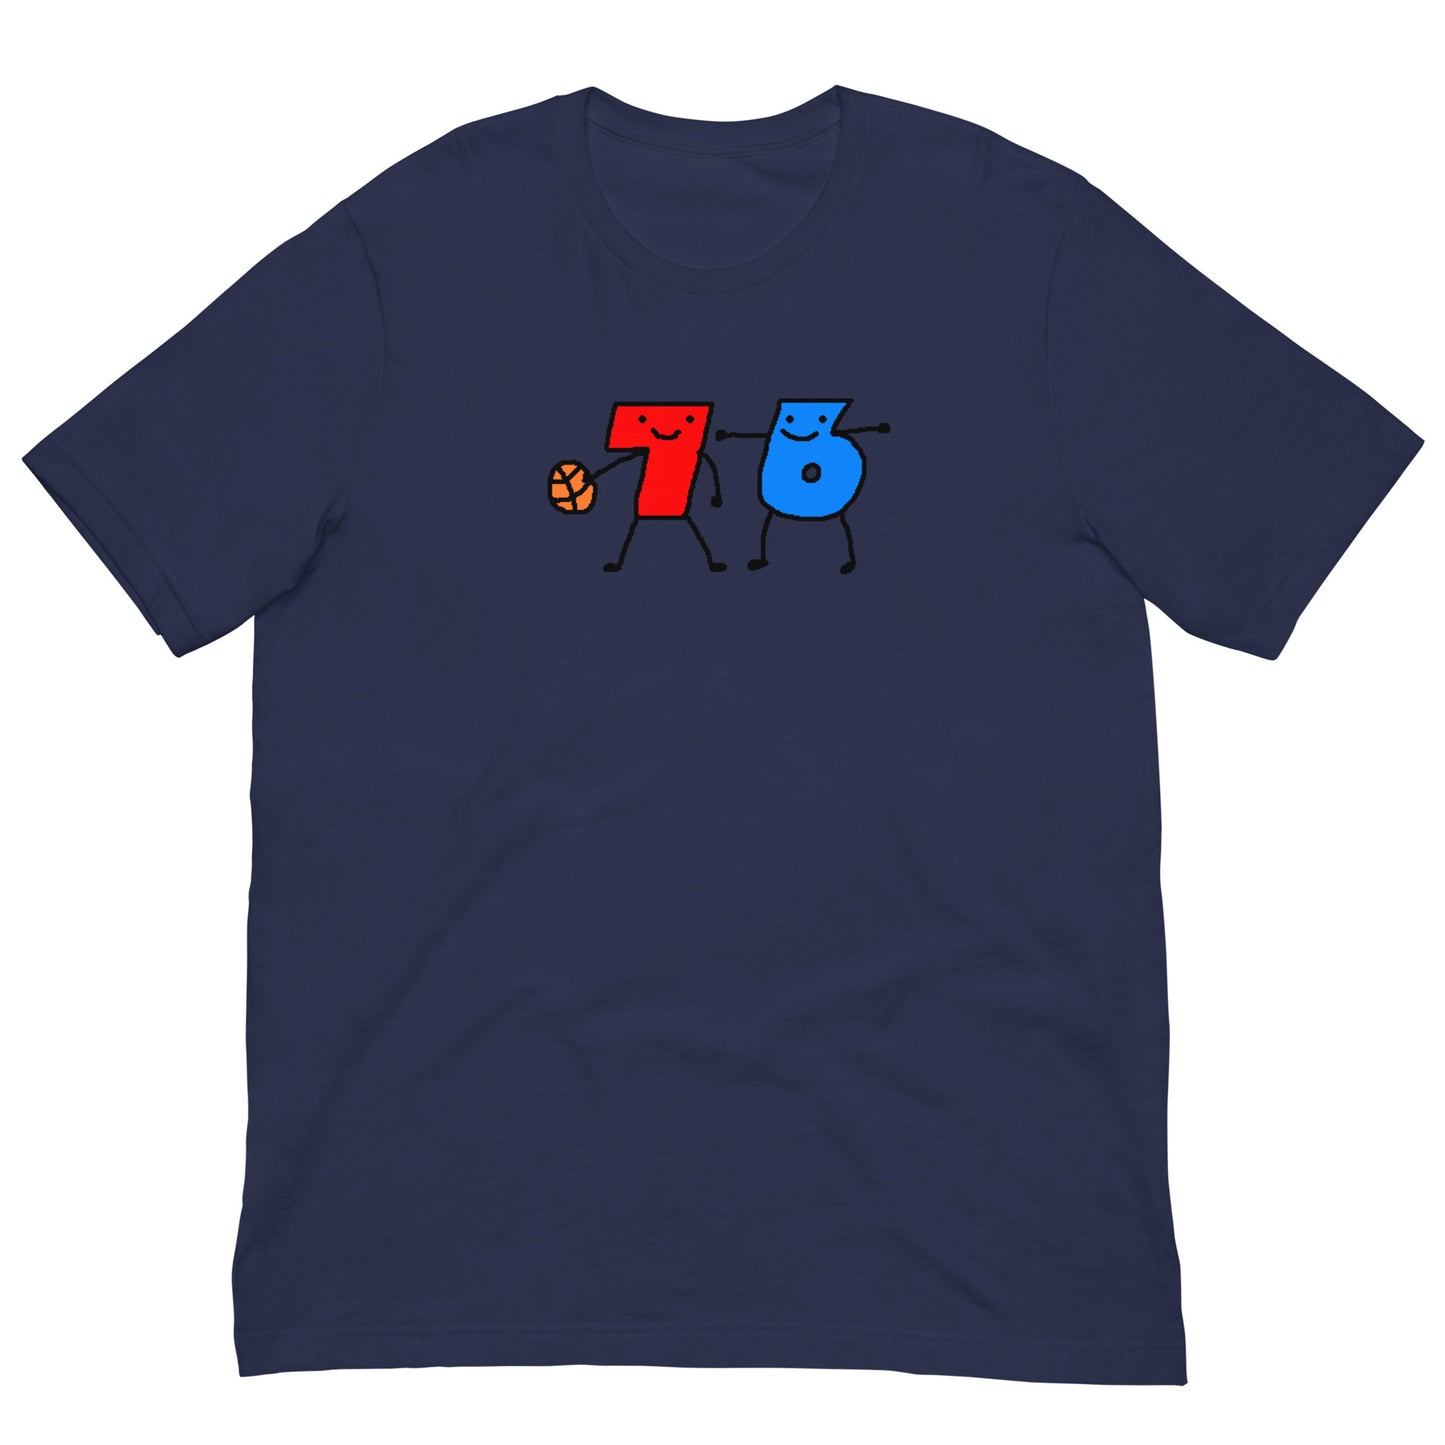 76 Shirt